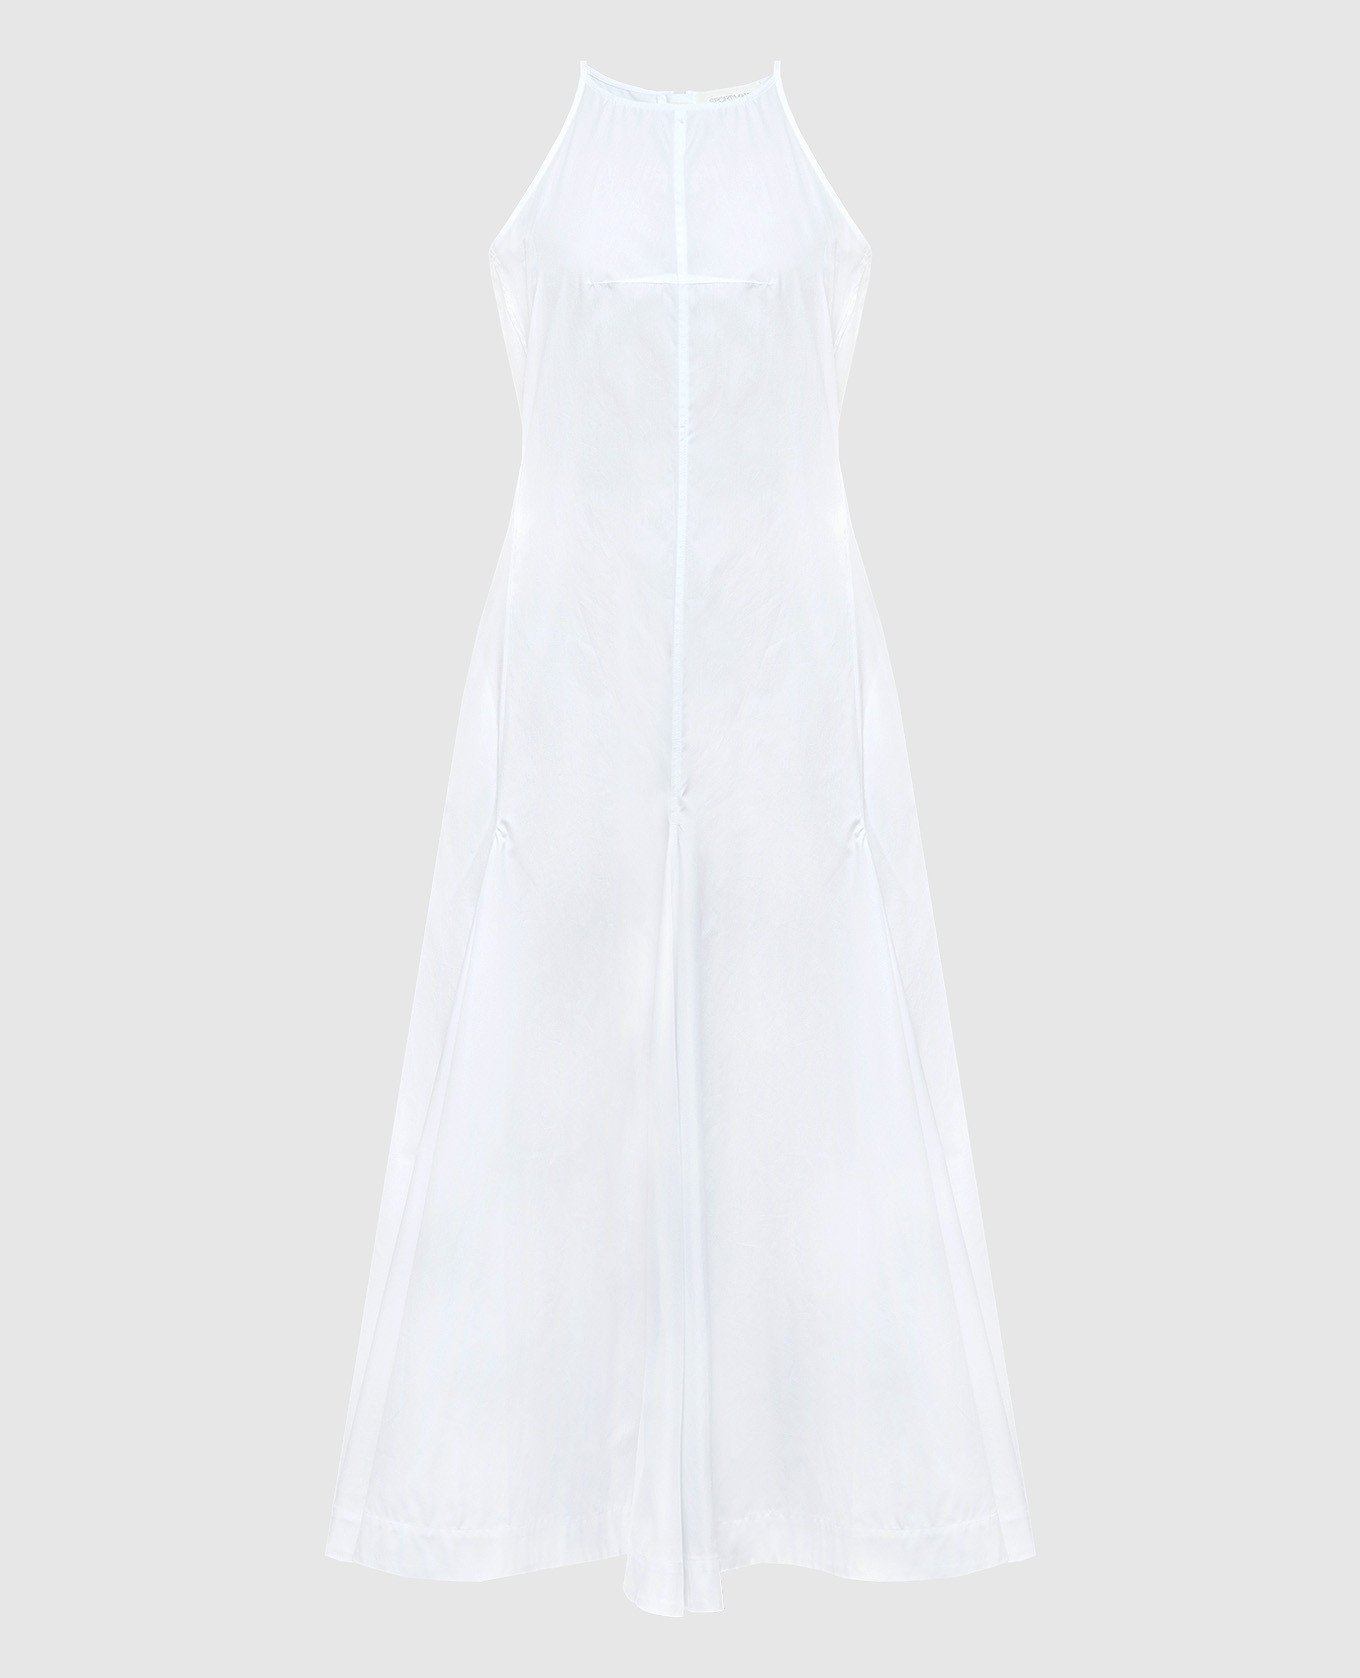 White CACTUS dress